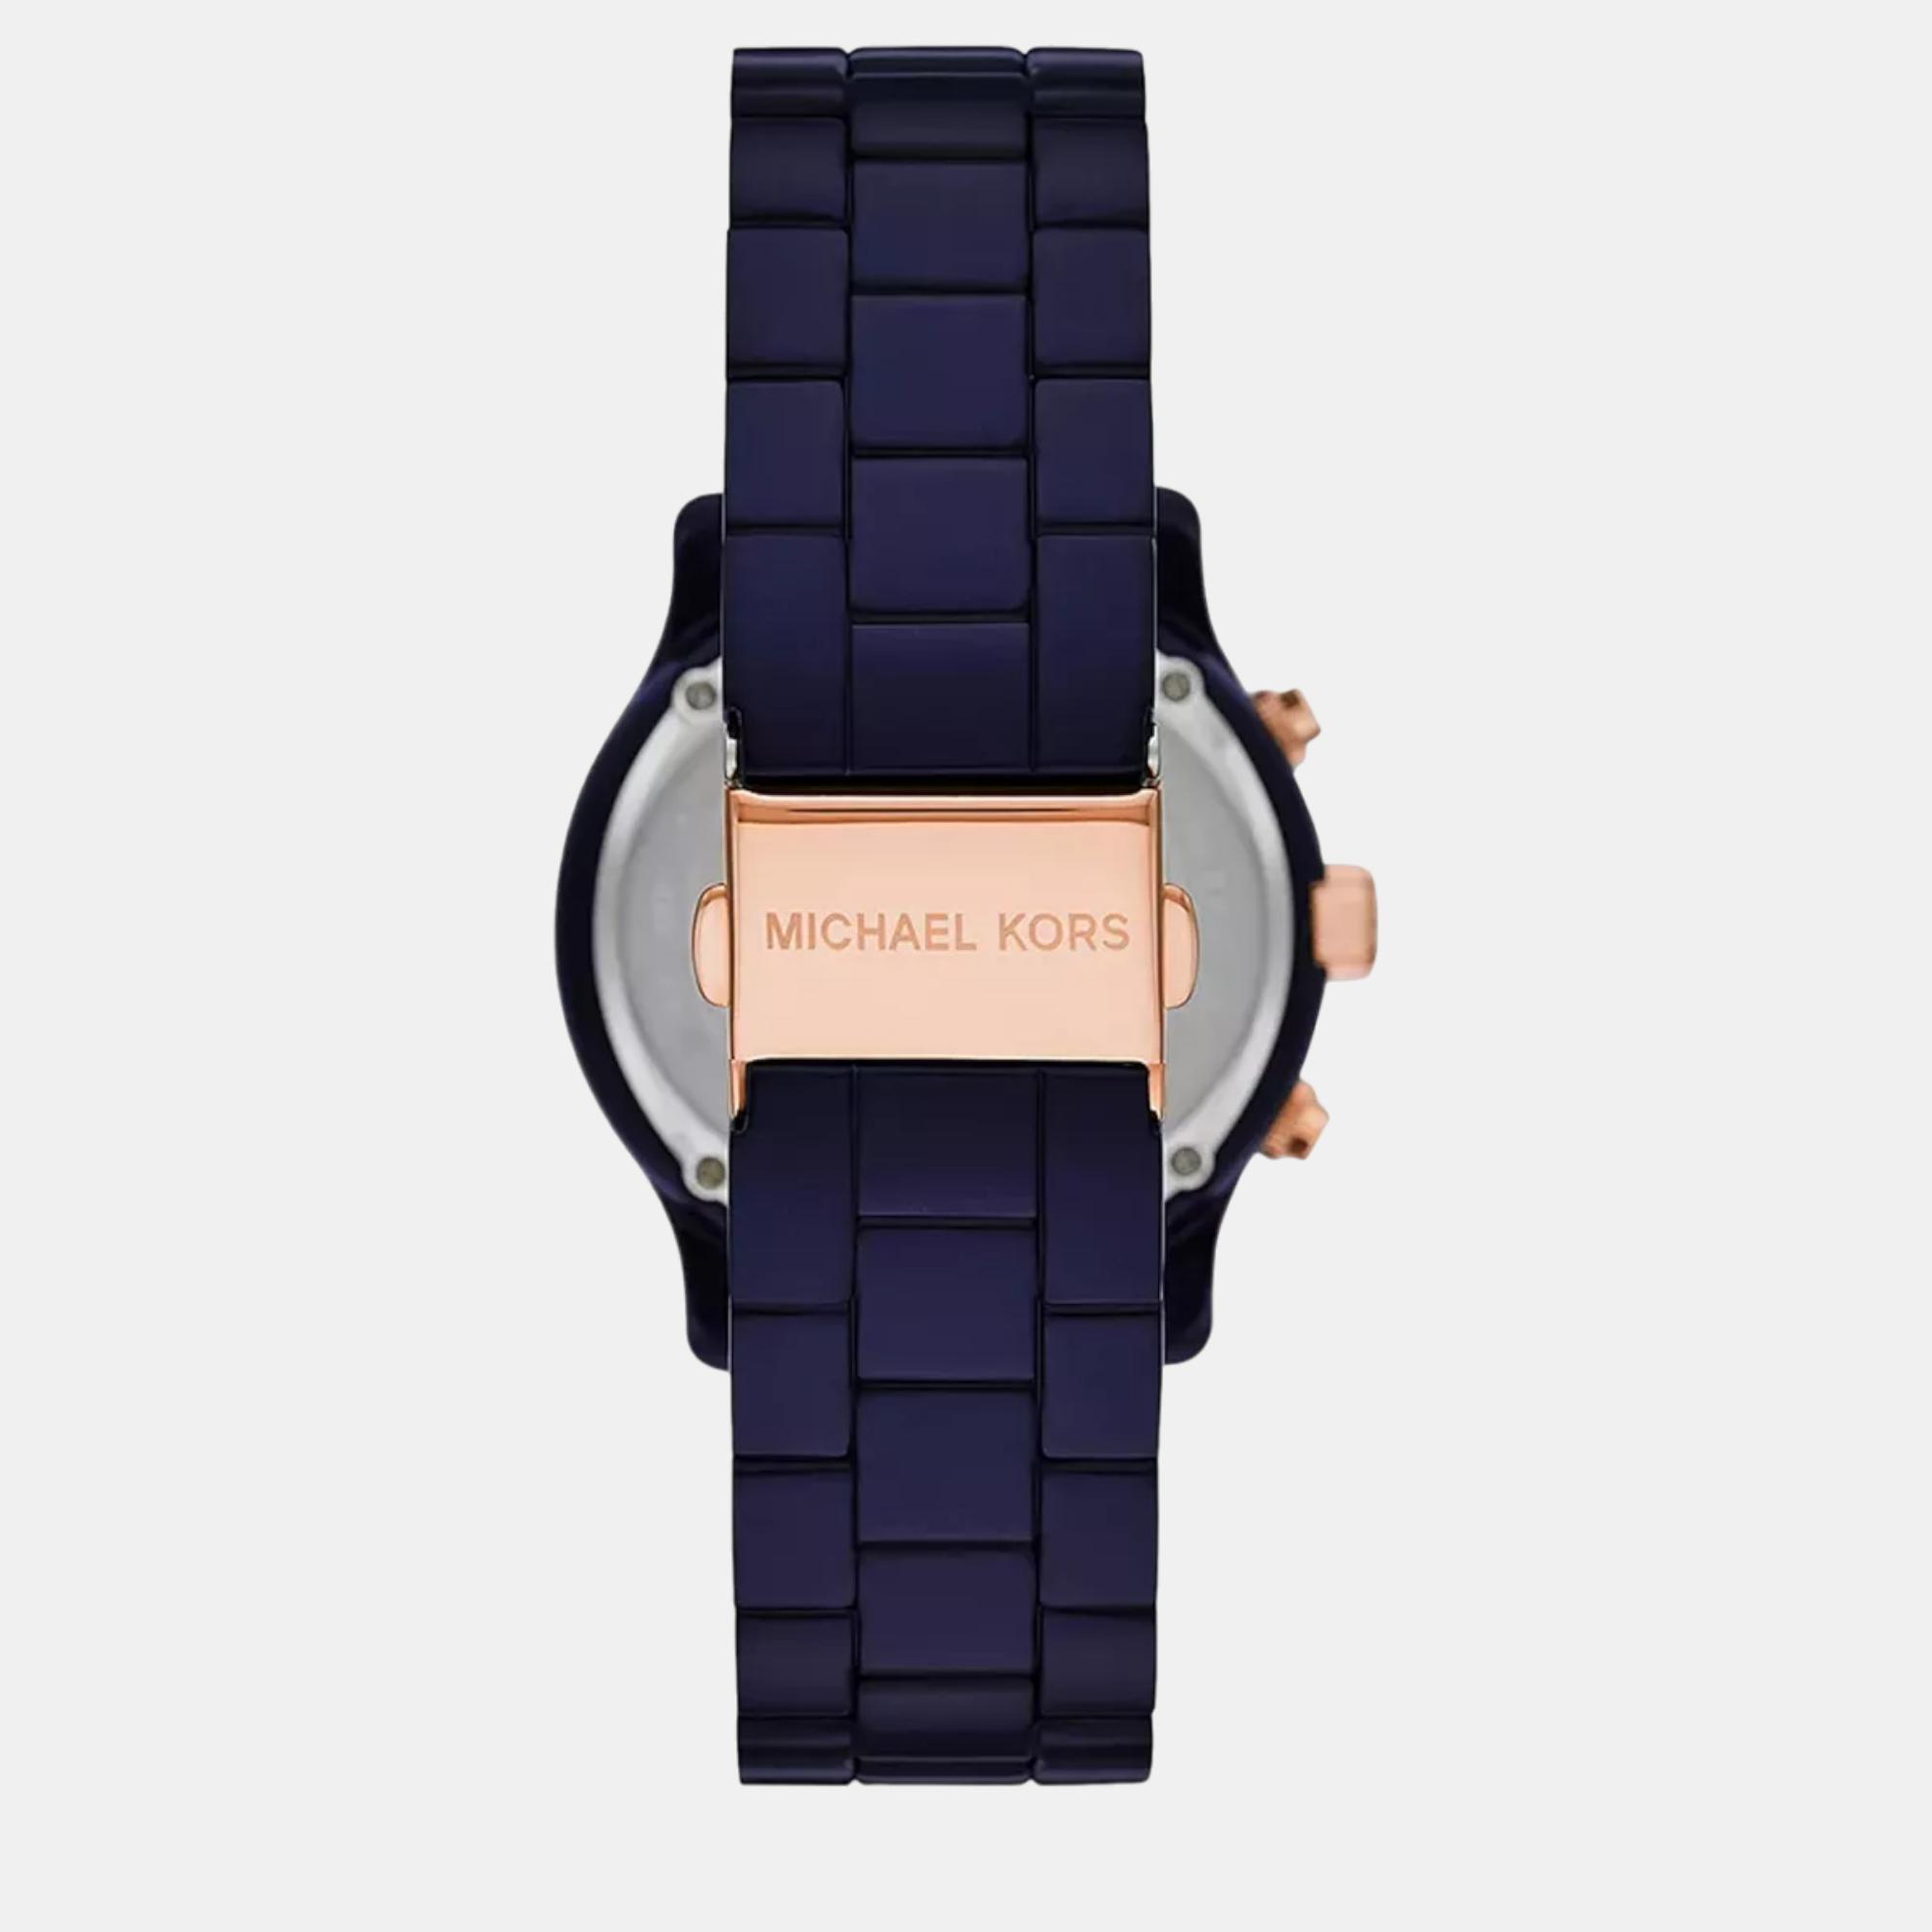 Michael Kors Dark Blue Stainless Steel Watch